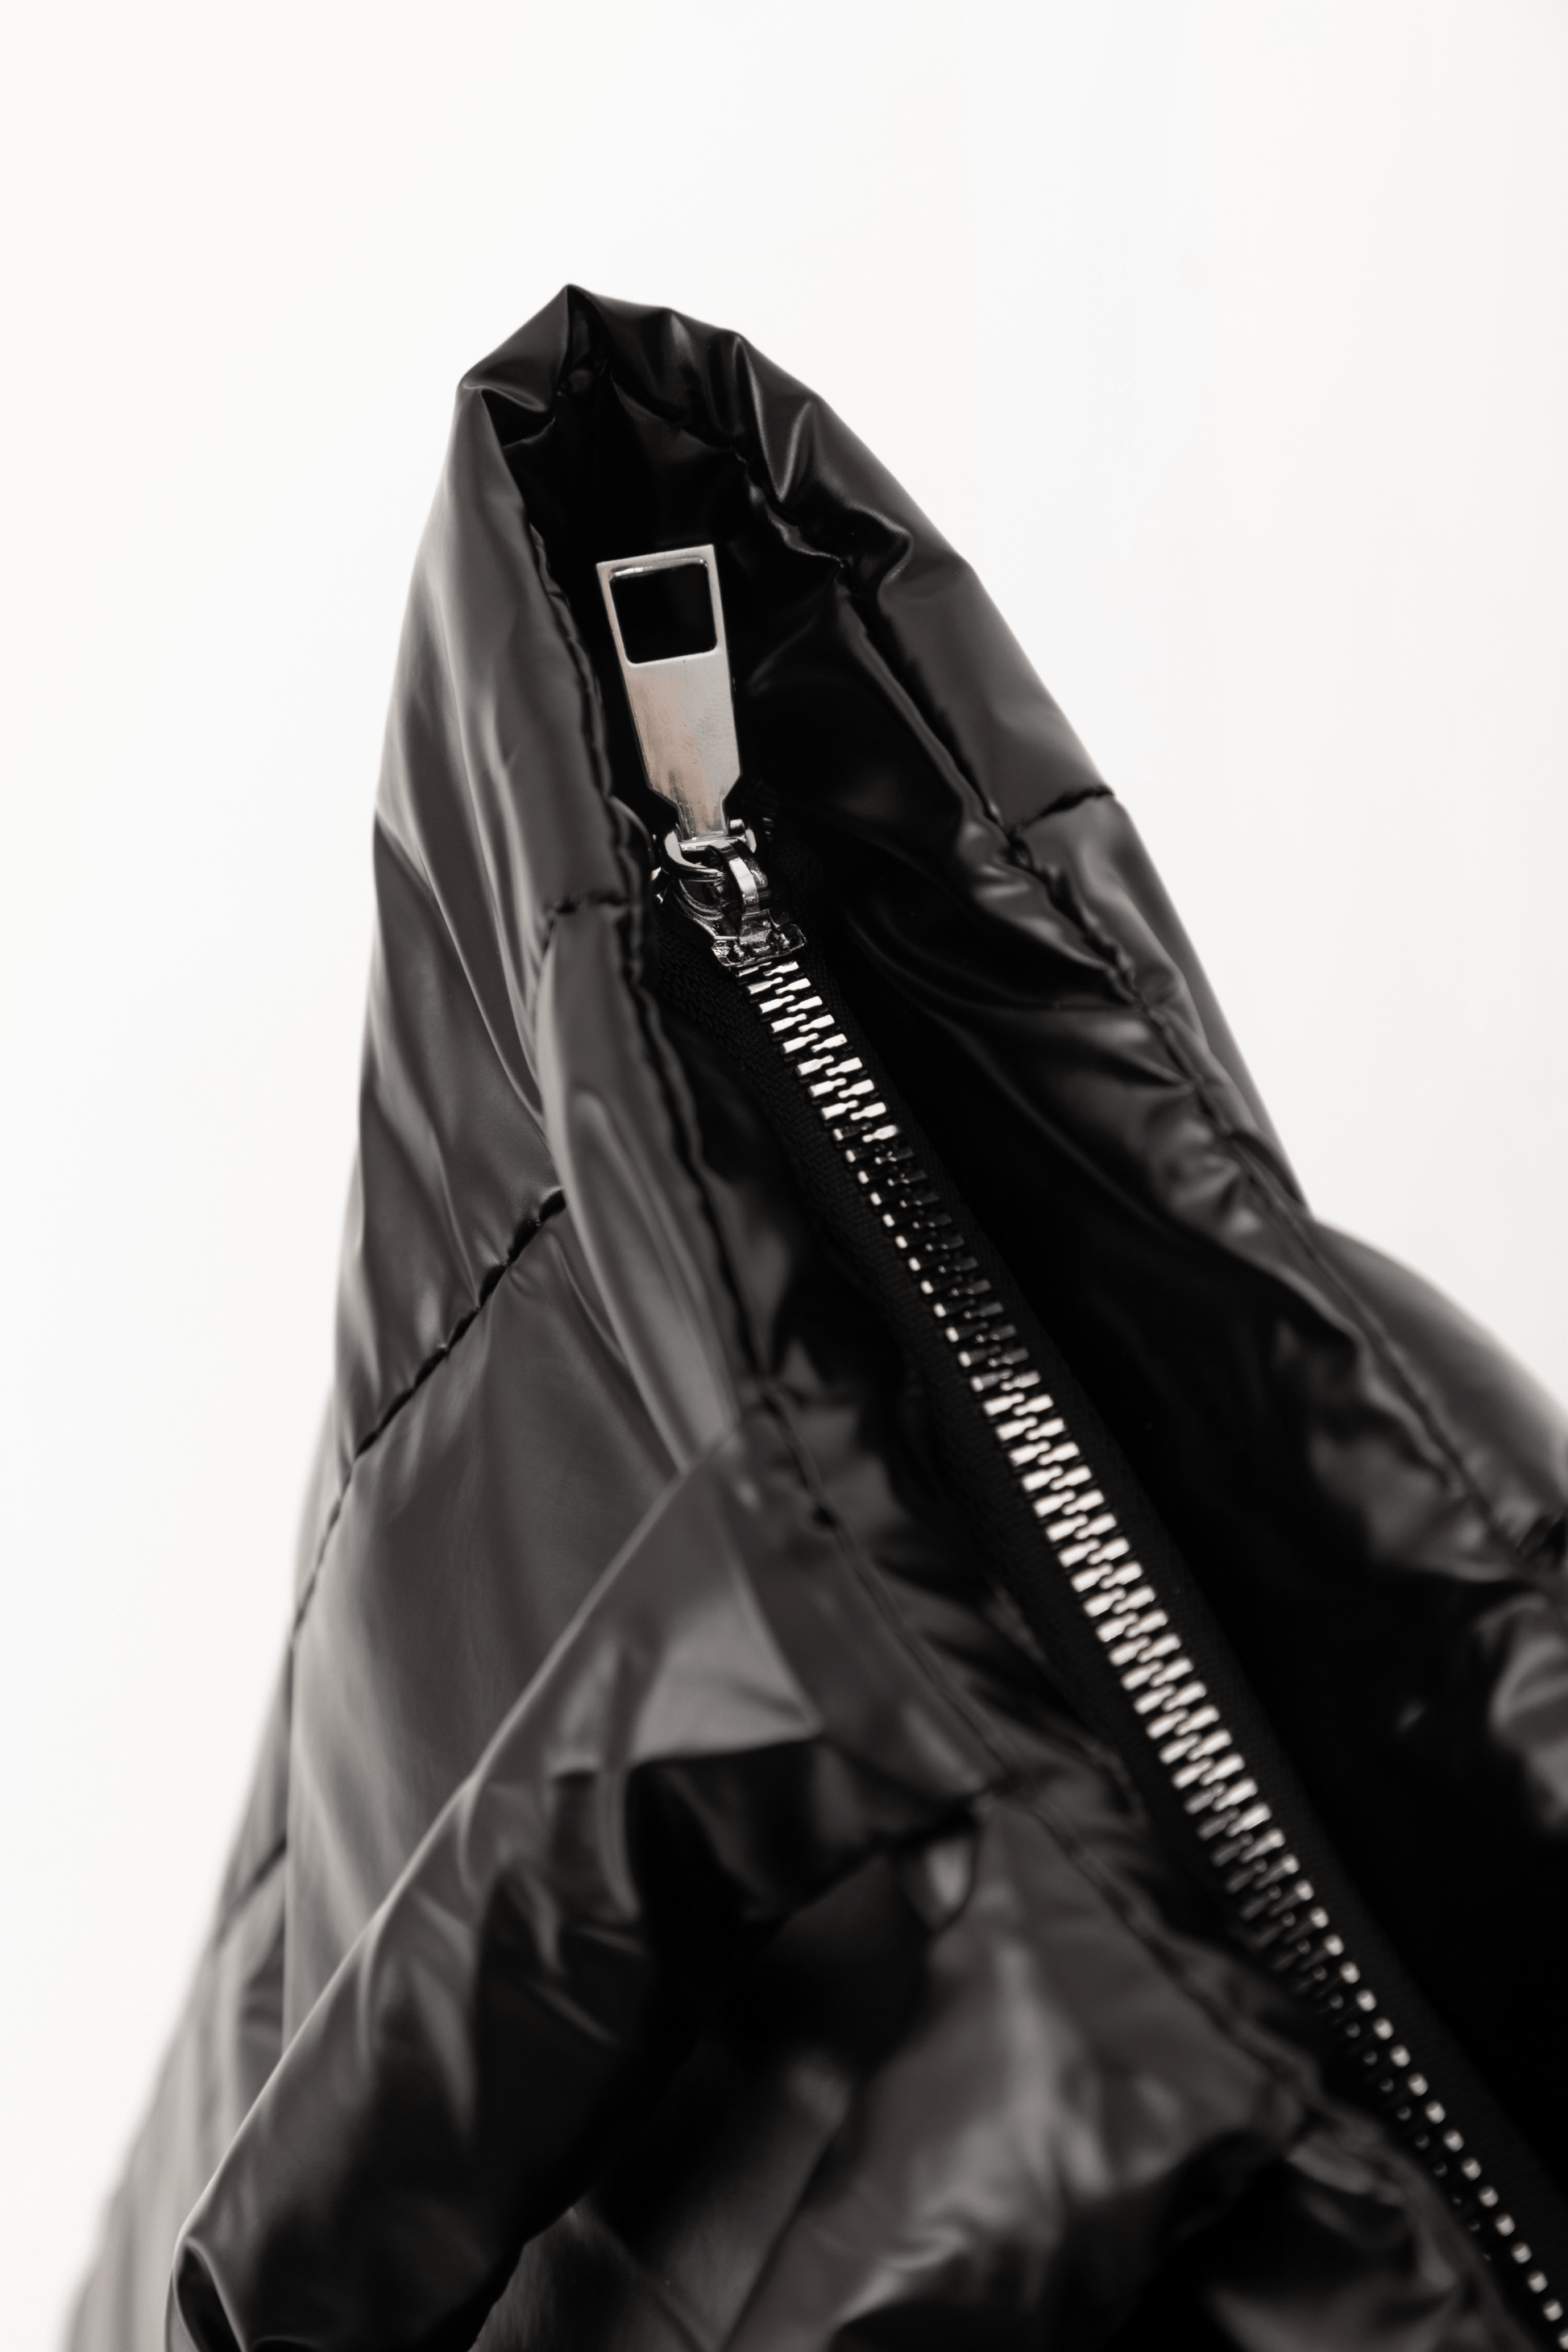 SHOPPER BAG BLACK - Ziba Activewear